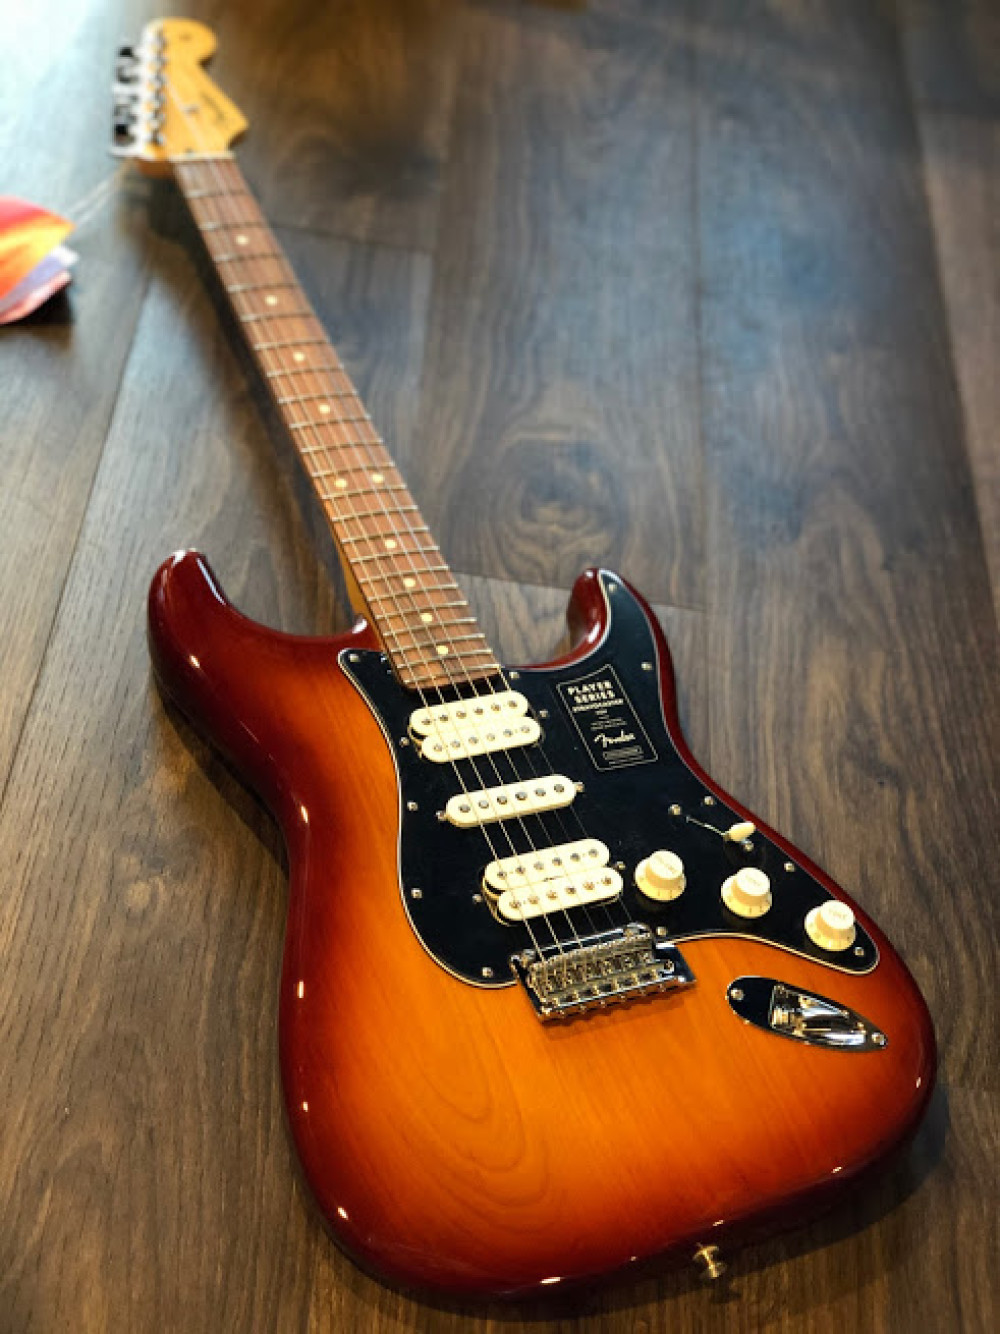 Fender Player Series Stratocaster HSH Pau Ferro Tobacco Sunburst